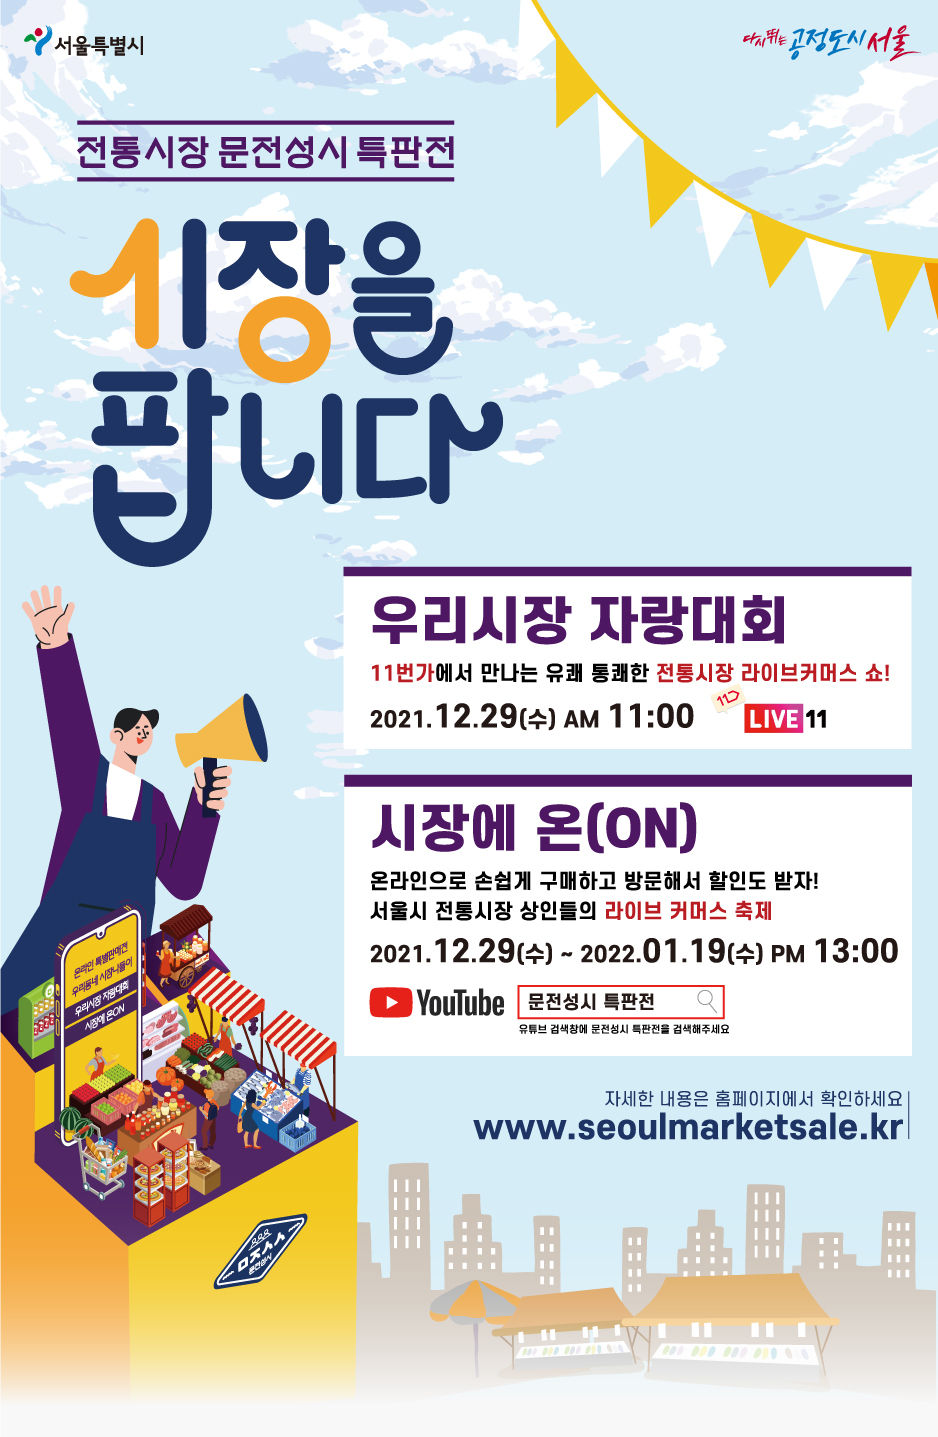 You are currently viewing 서울시, 온라인에서 만나는 전통시장…라이브 커머스, 유튜브 생중계 진행